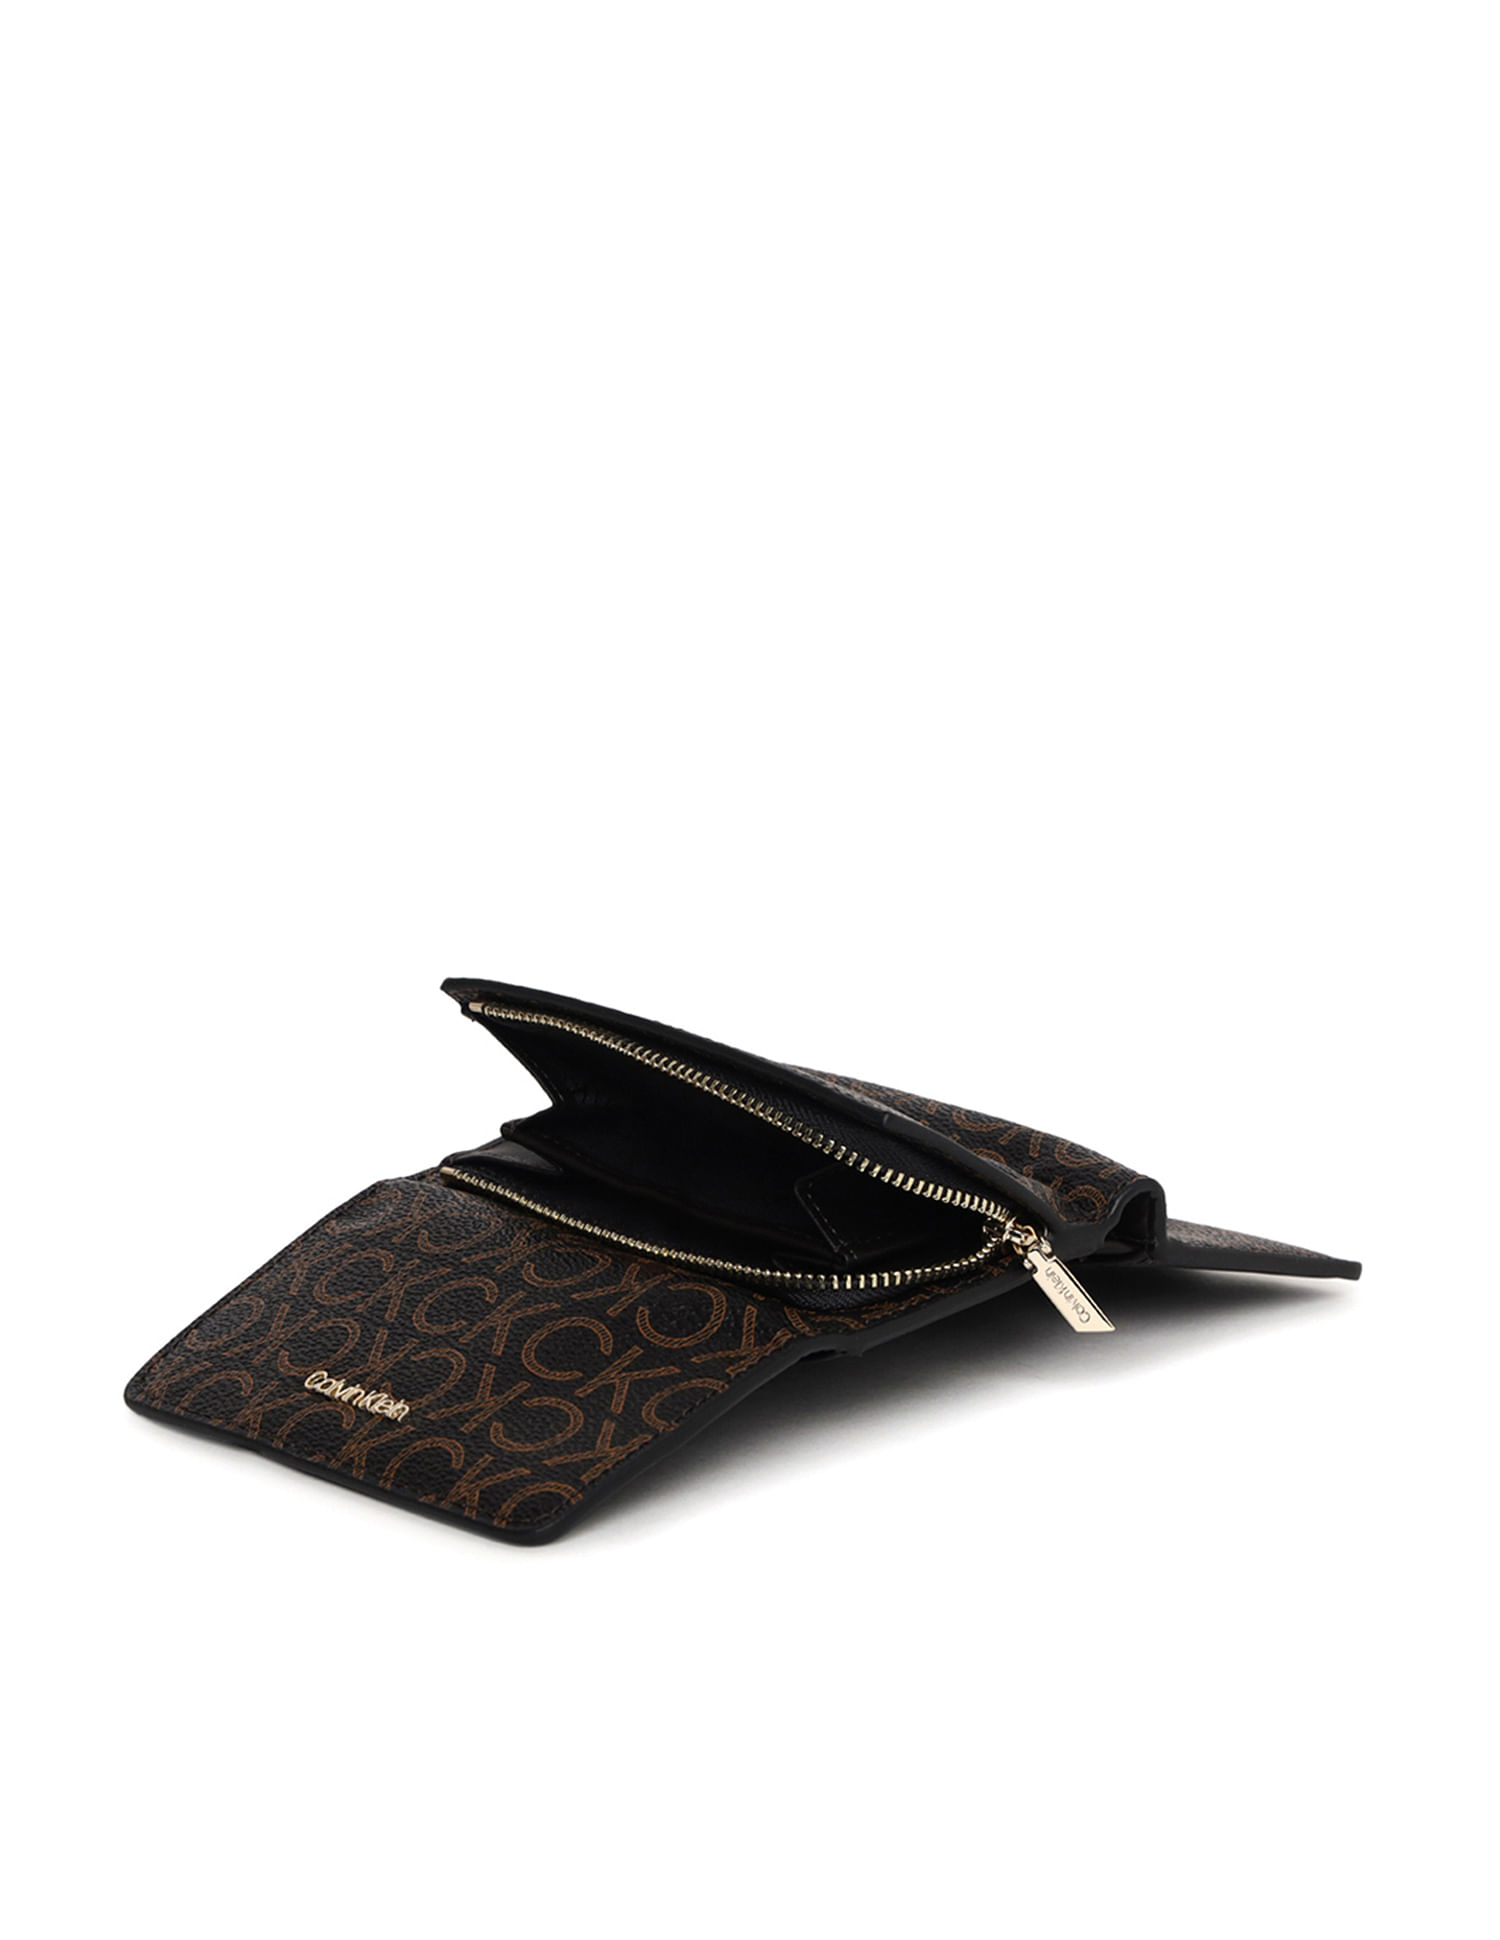 Small Calvin Klein zippered clutch wristlet travel Wallet pouch fits  passport | eBay